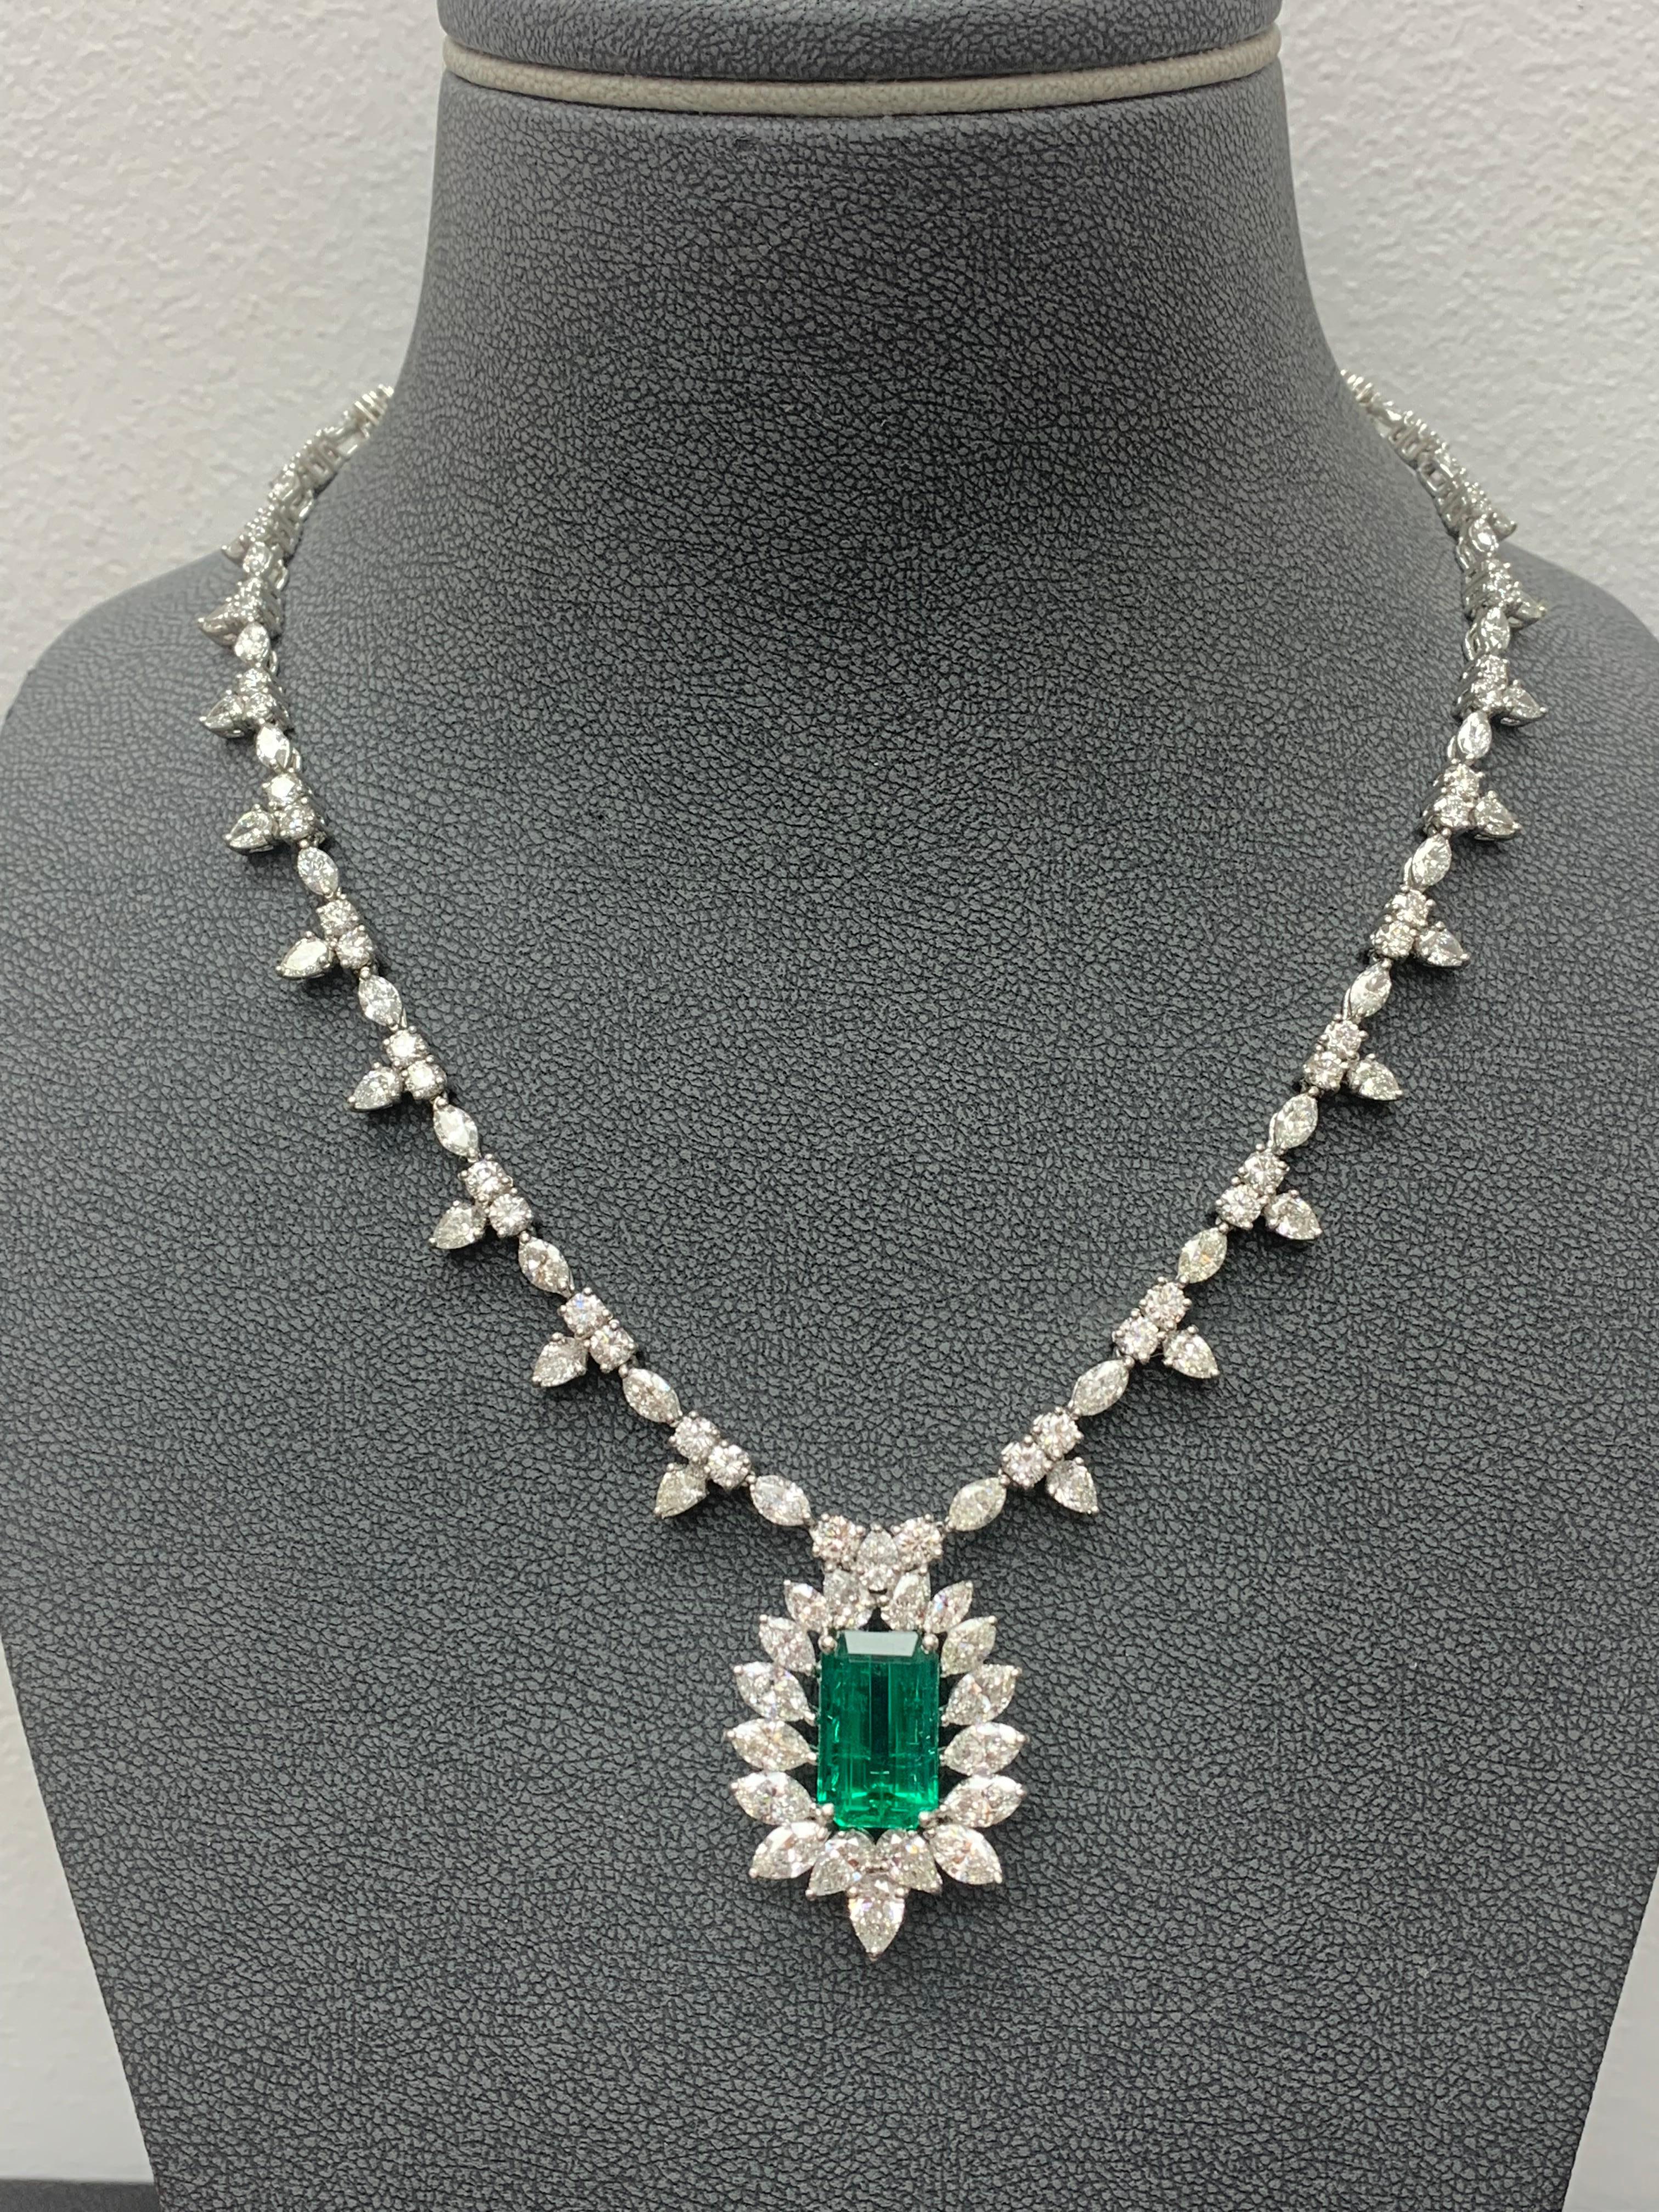 Emerald Cut CERTIFIED 8.14 Carat Emerald and Diamond Necklace in Platinum For Sale